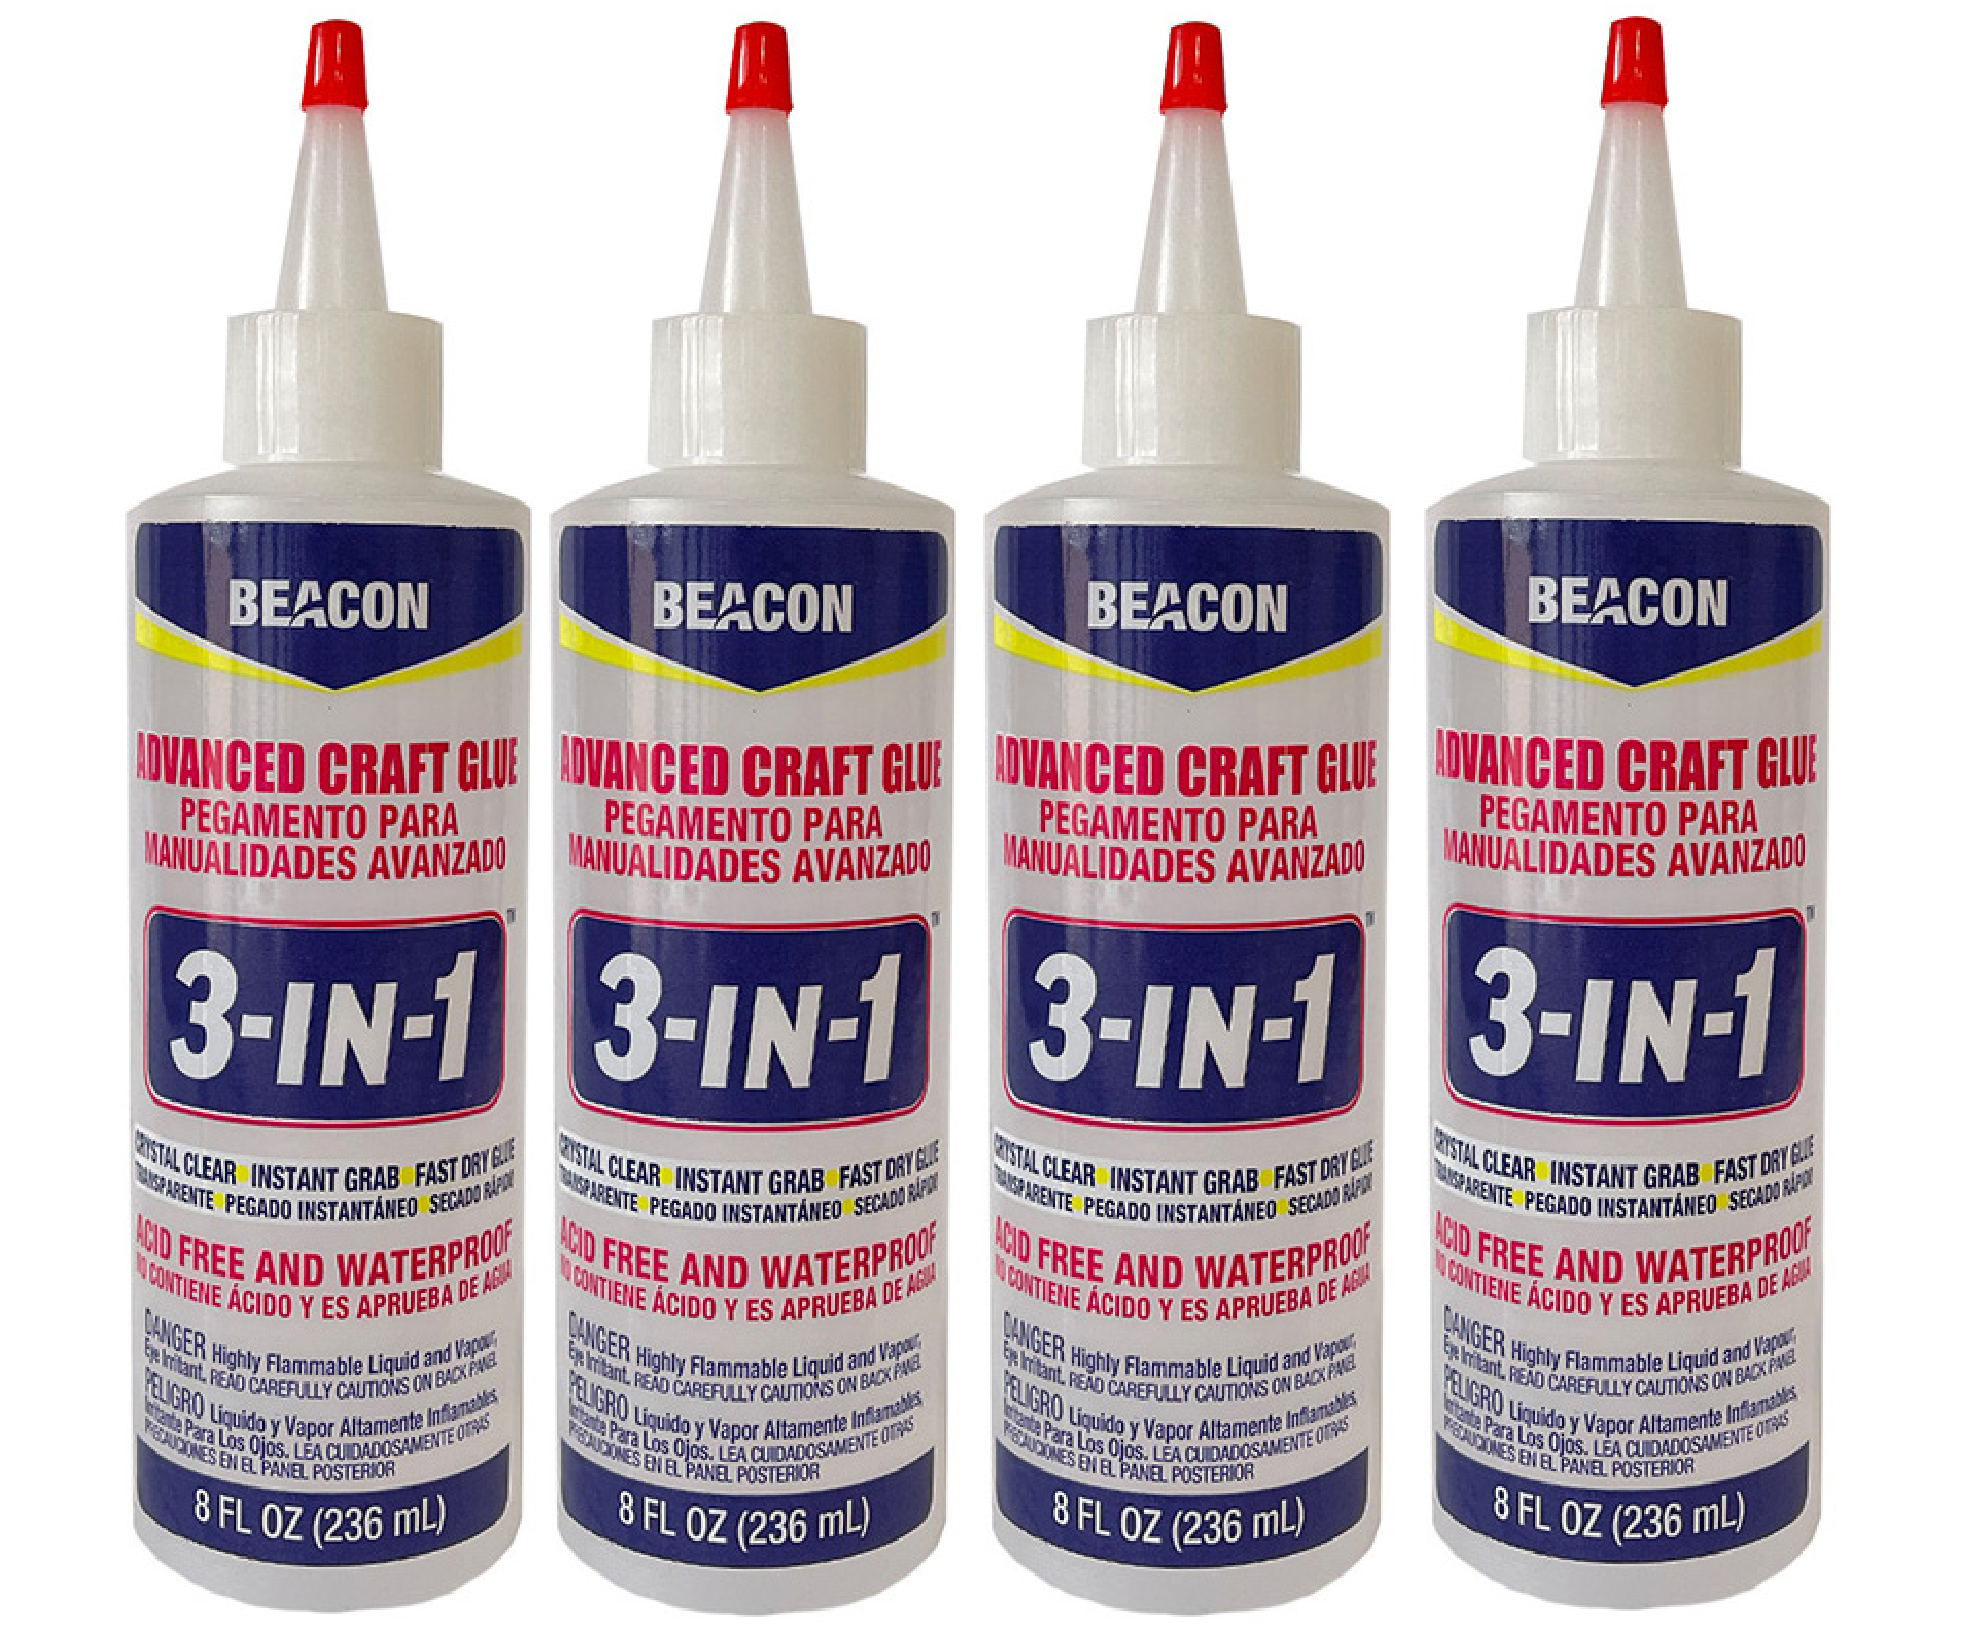  Beacon Mixed Media Glue 4 oz